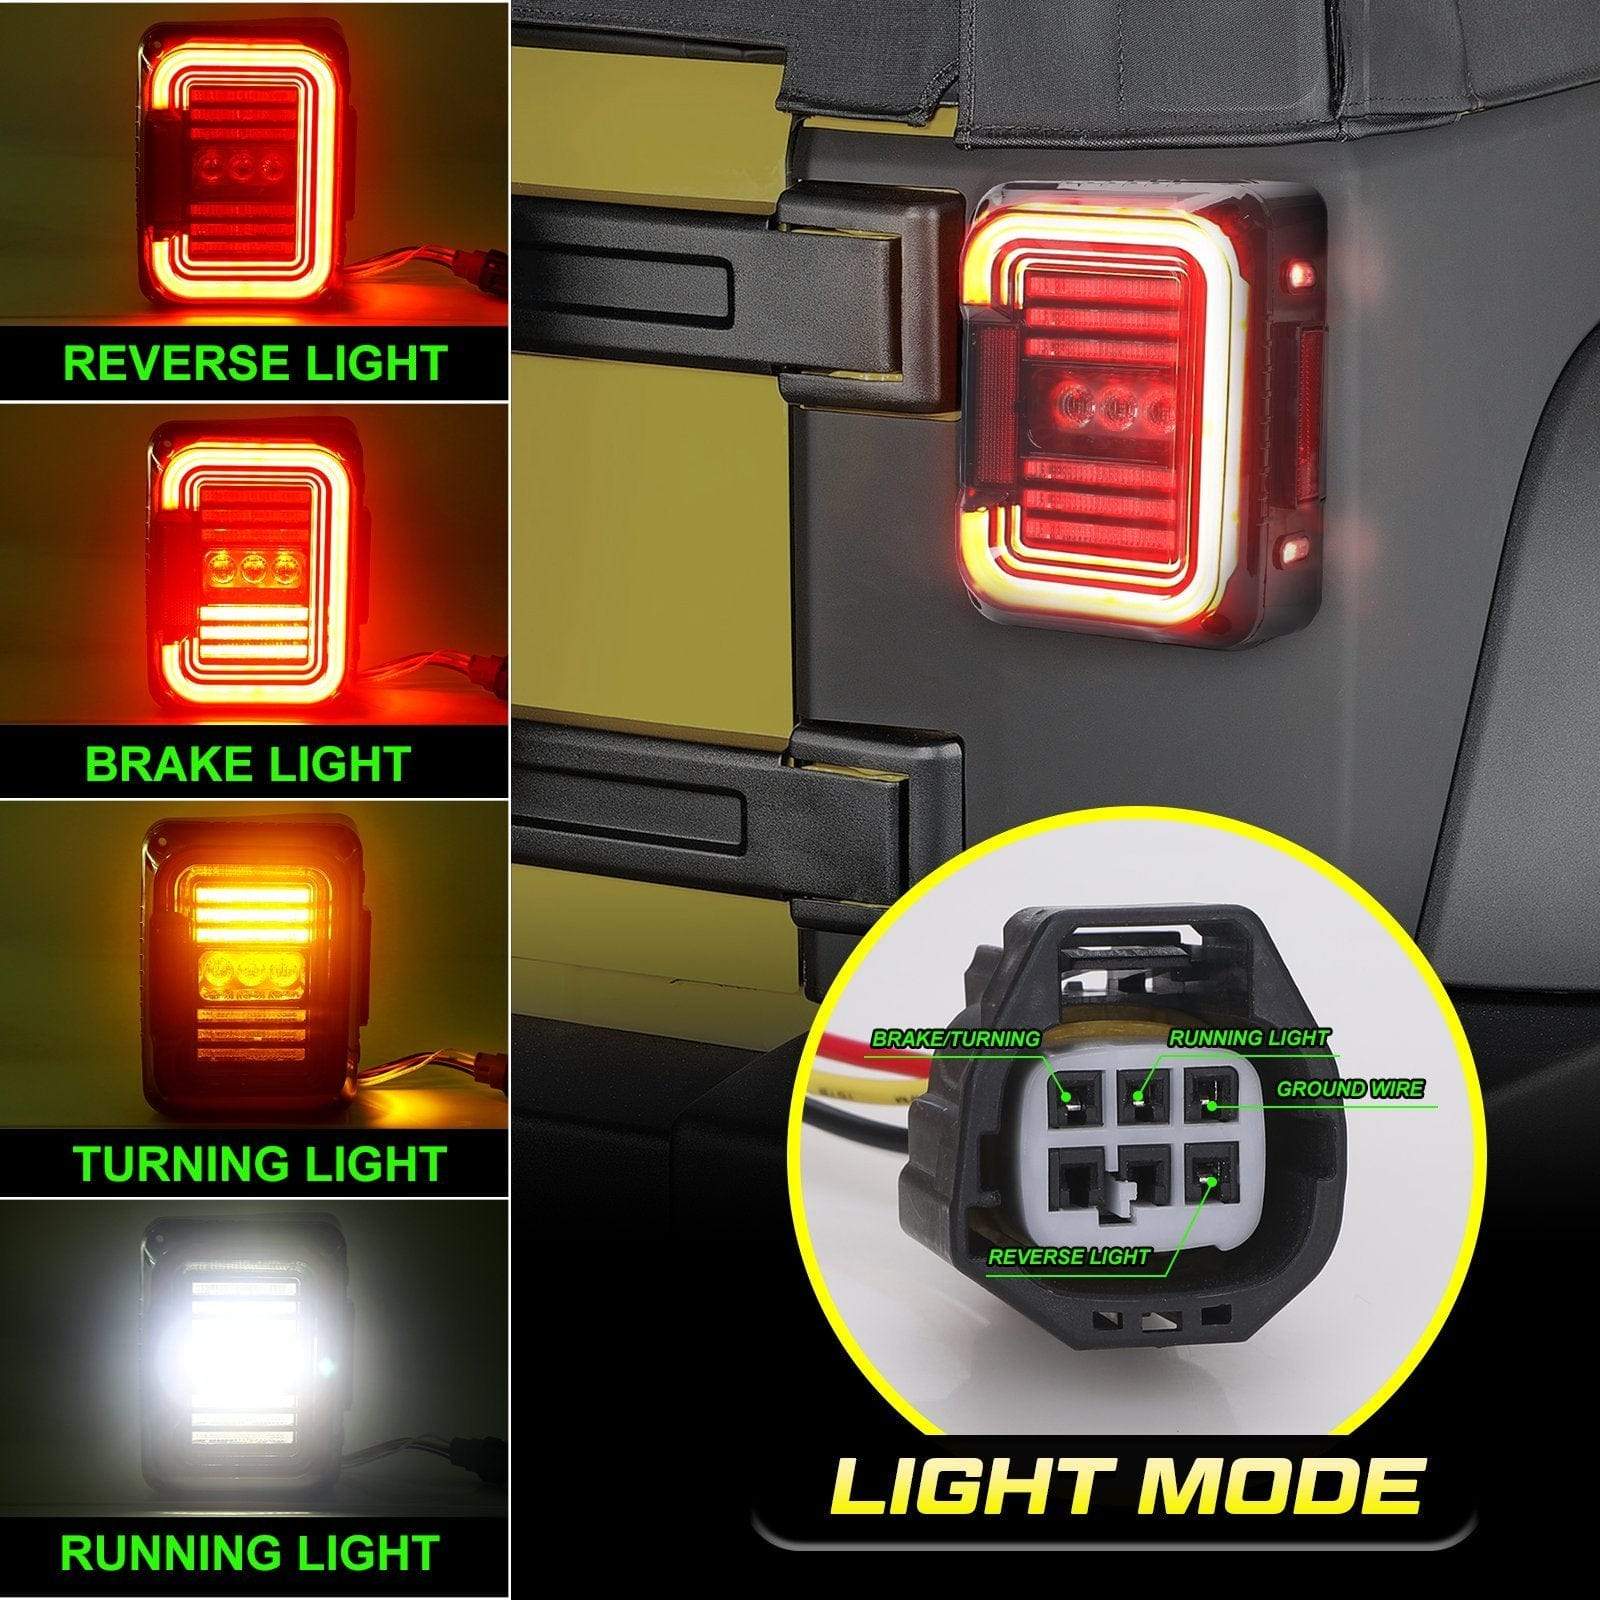 Epiccross™ jeep wrangler jk tail lights lighting mode